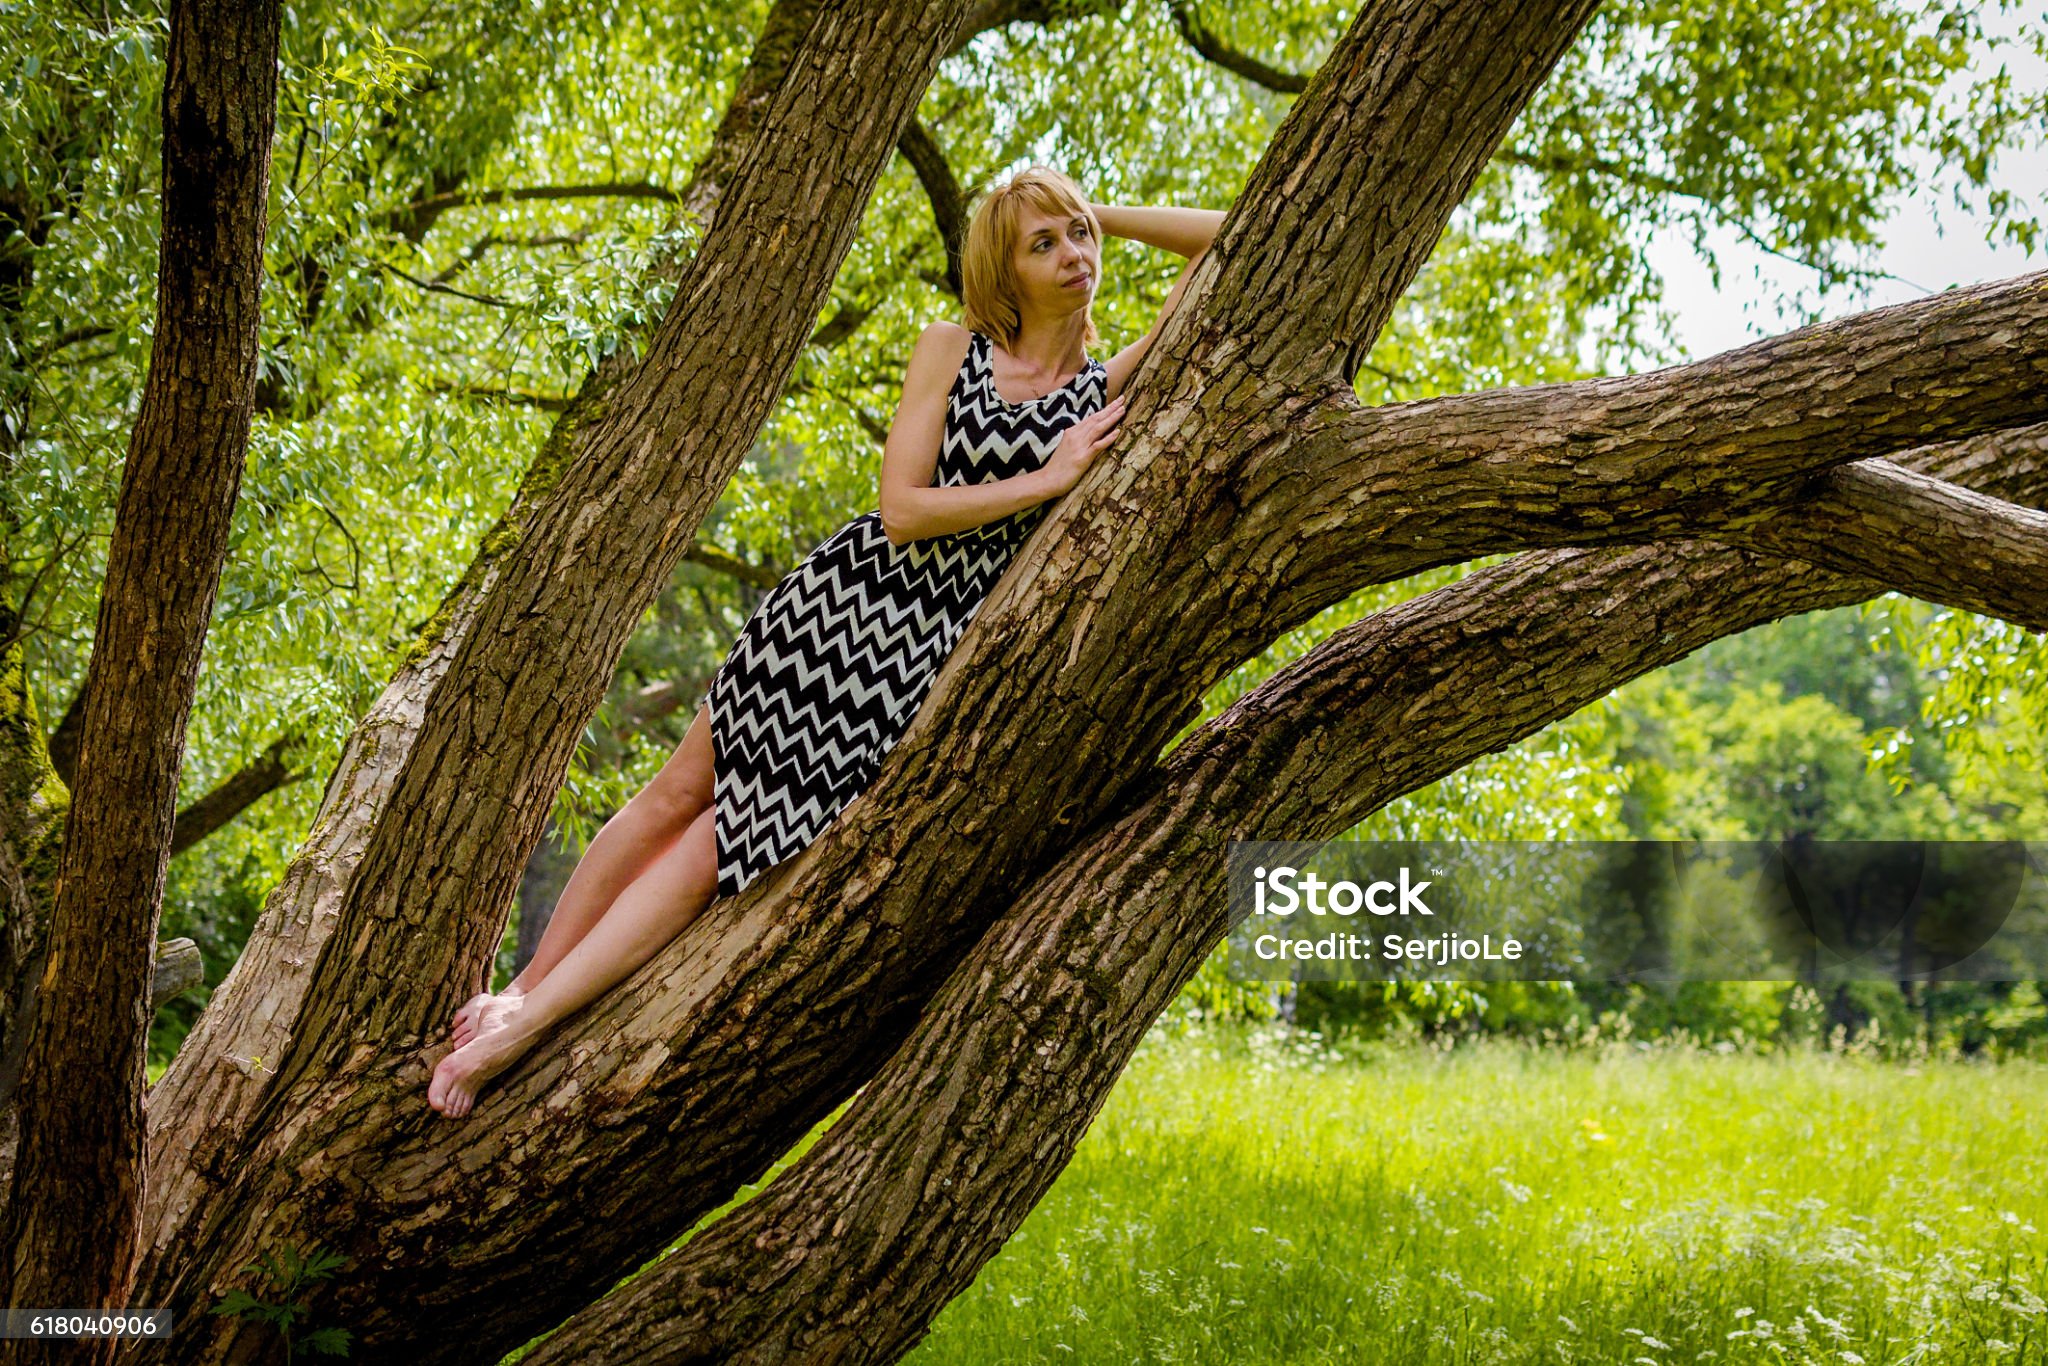 https://media.istockphoto.com/id/618040906/photo/beautiful-young-girl-lies-on-a-tree.jpg?s=2048x2048&amp;w=is&amp;k=20&amp;c=YE_A-e0PJHPF0CmRMFSONF_NUiySQH_EH-BZBkiEaK8=